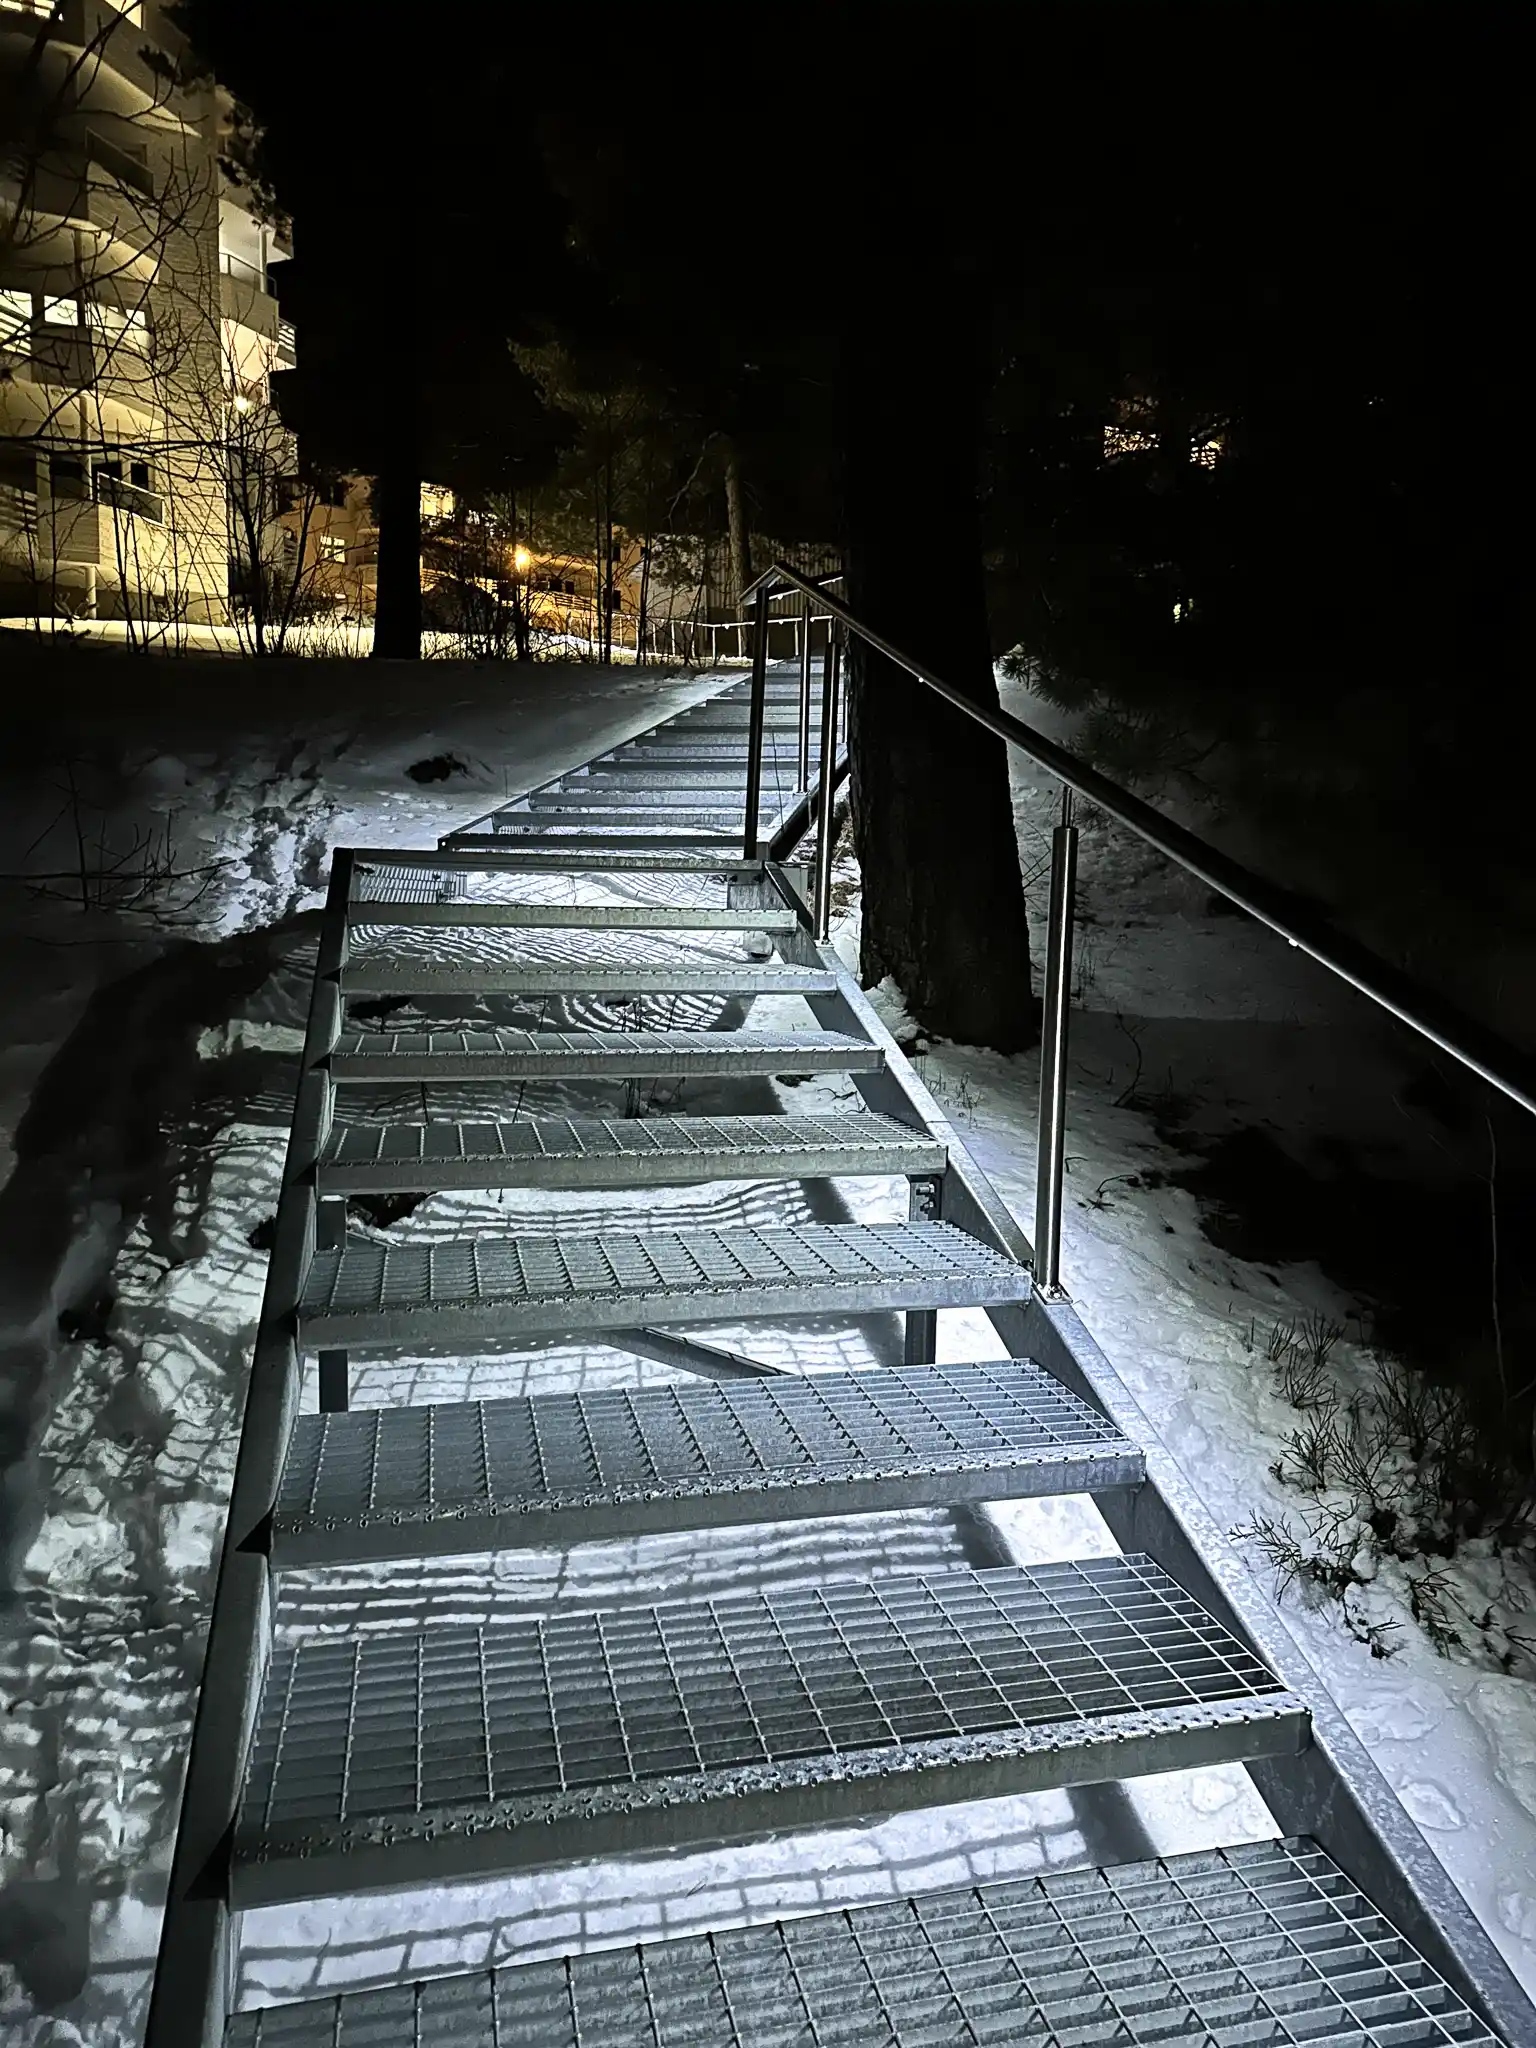 Terrengtrapp i vintermørket med håndløpere og LED-belydsning.